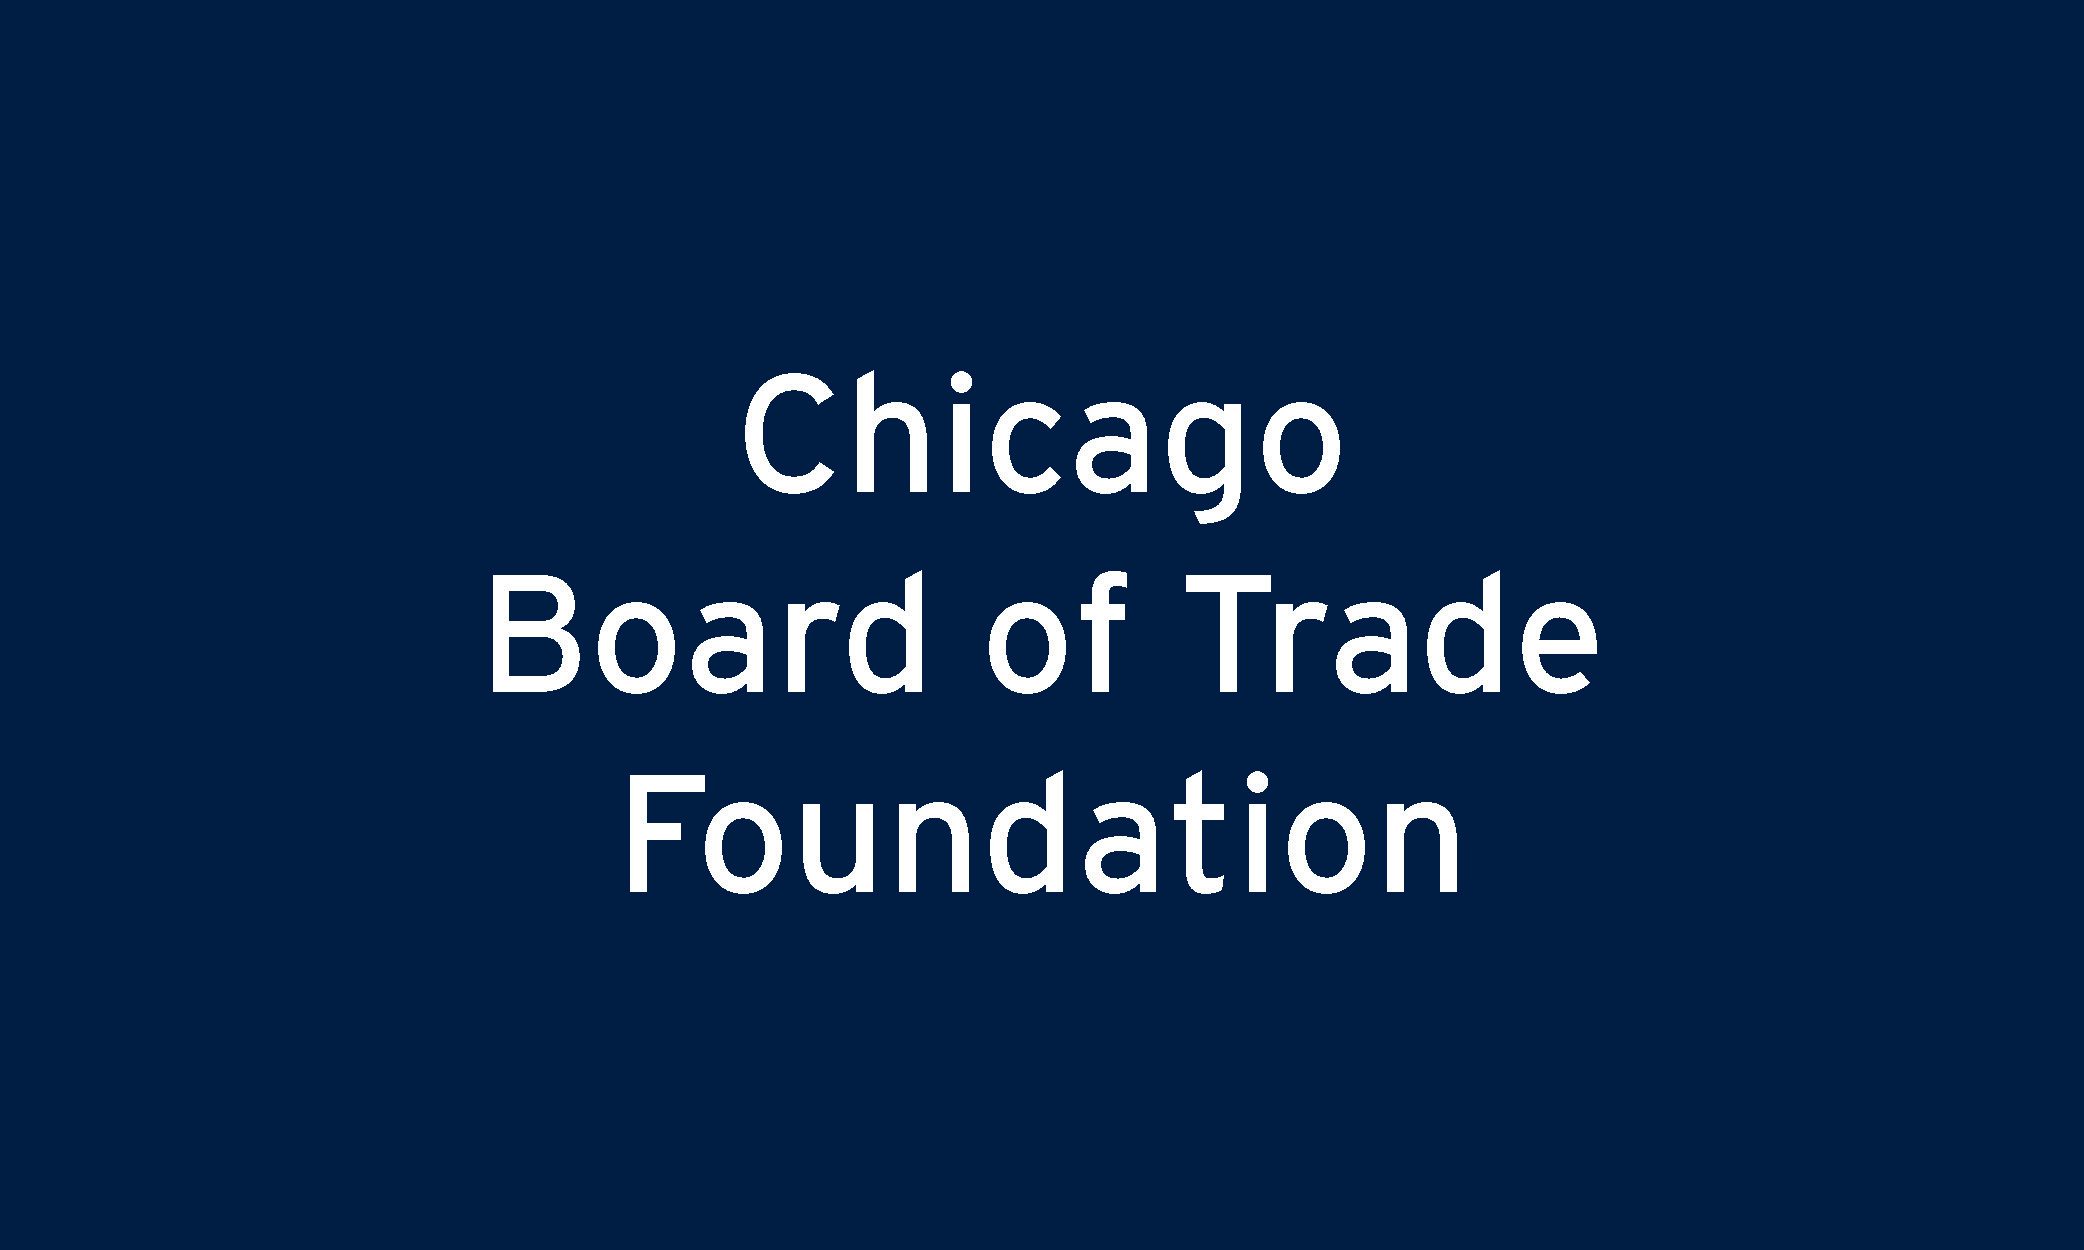 Chicago Board of Trade Foundation